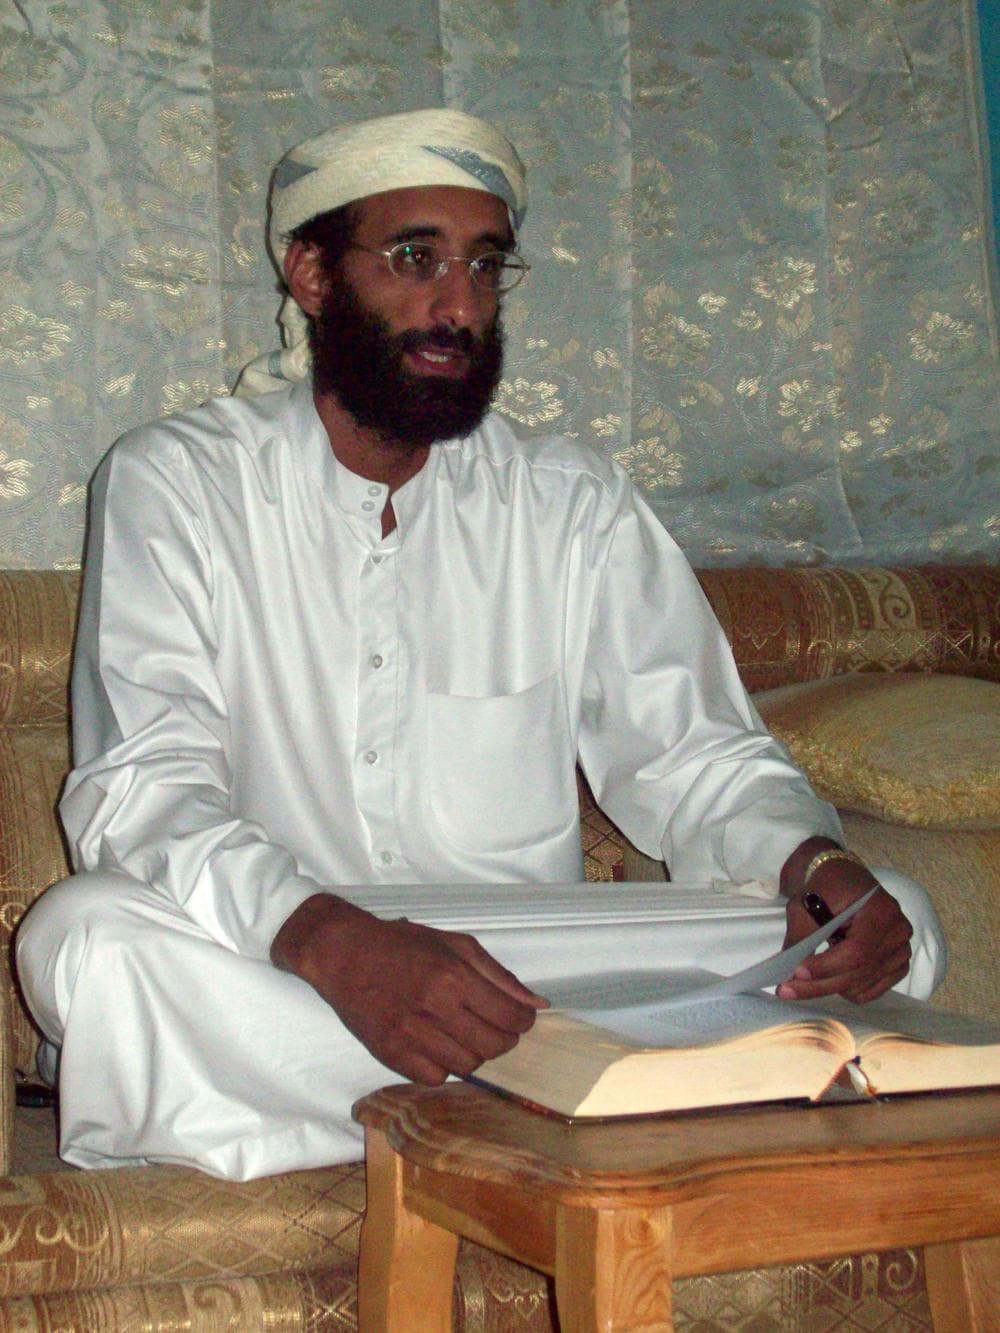  Imam Anwar al-Awlaki in Yemen in Oct. 2008.  (AP Photo/Muhammad ud-Deen) 